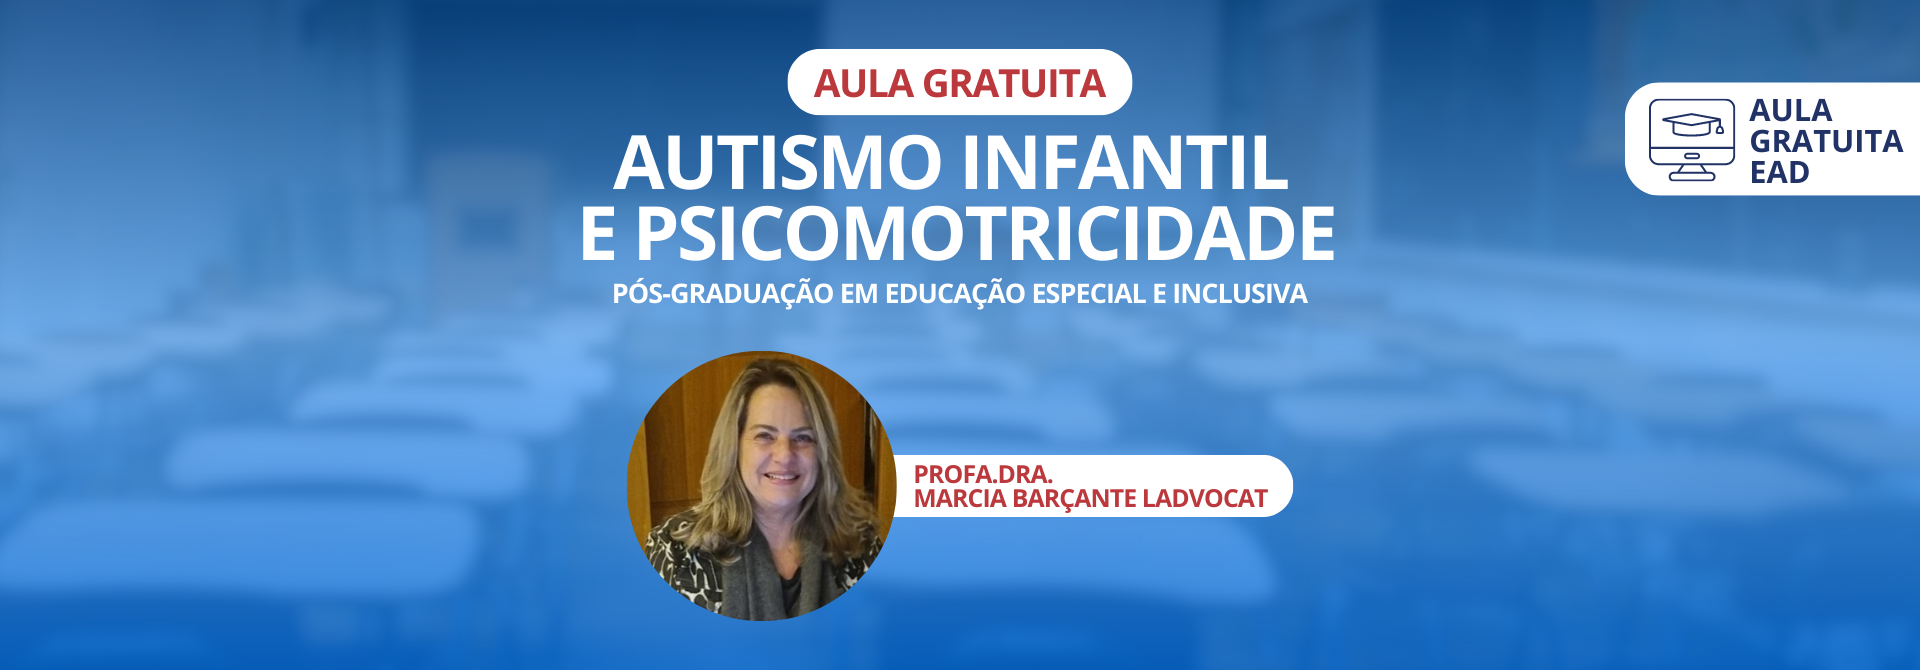 AULA ABERTA - AUTISMO INFANTIL E PSICOMOTRICIDADE - PROFAª MARCIA BARÇANTE LADVOCAT